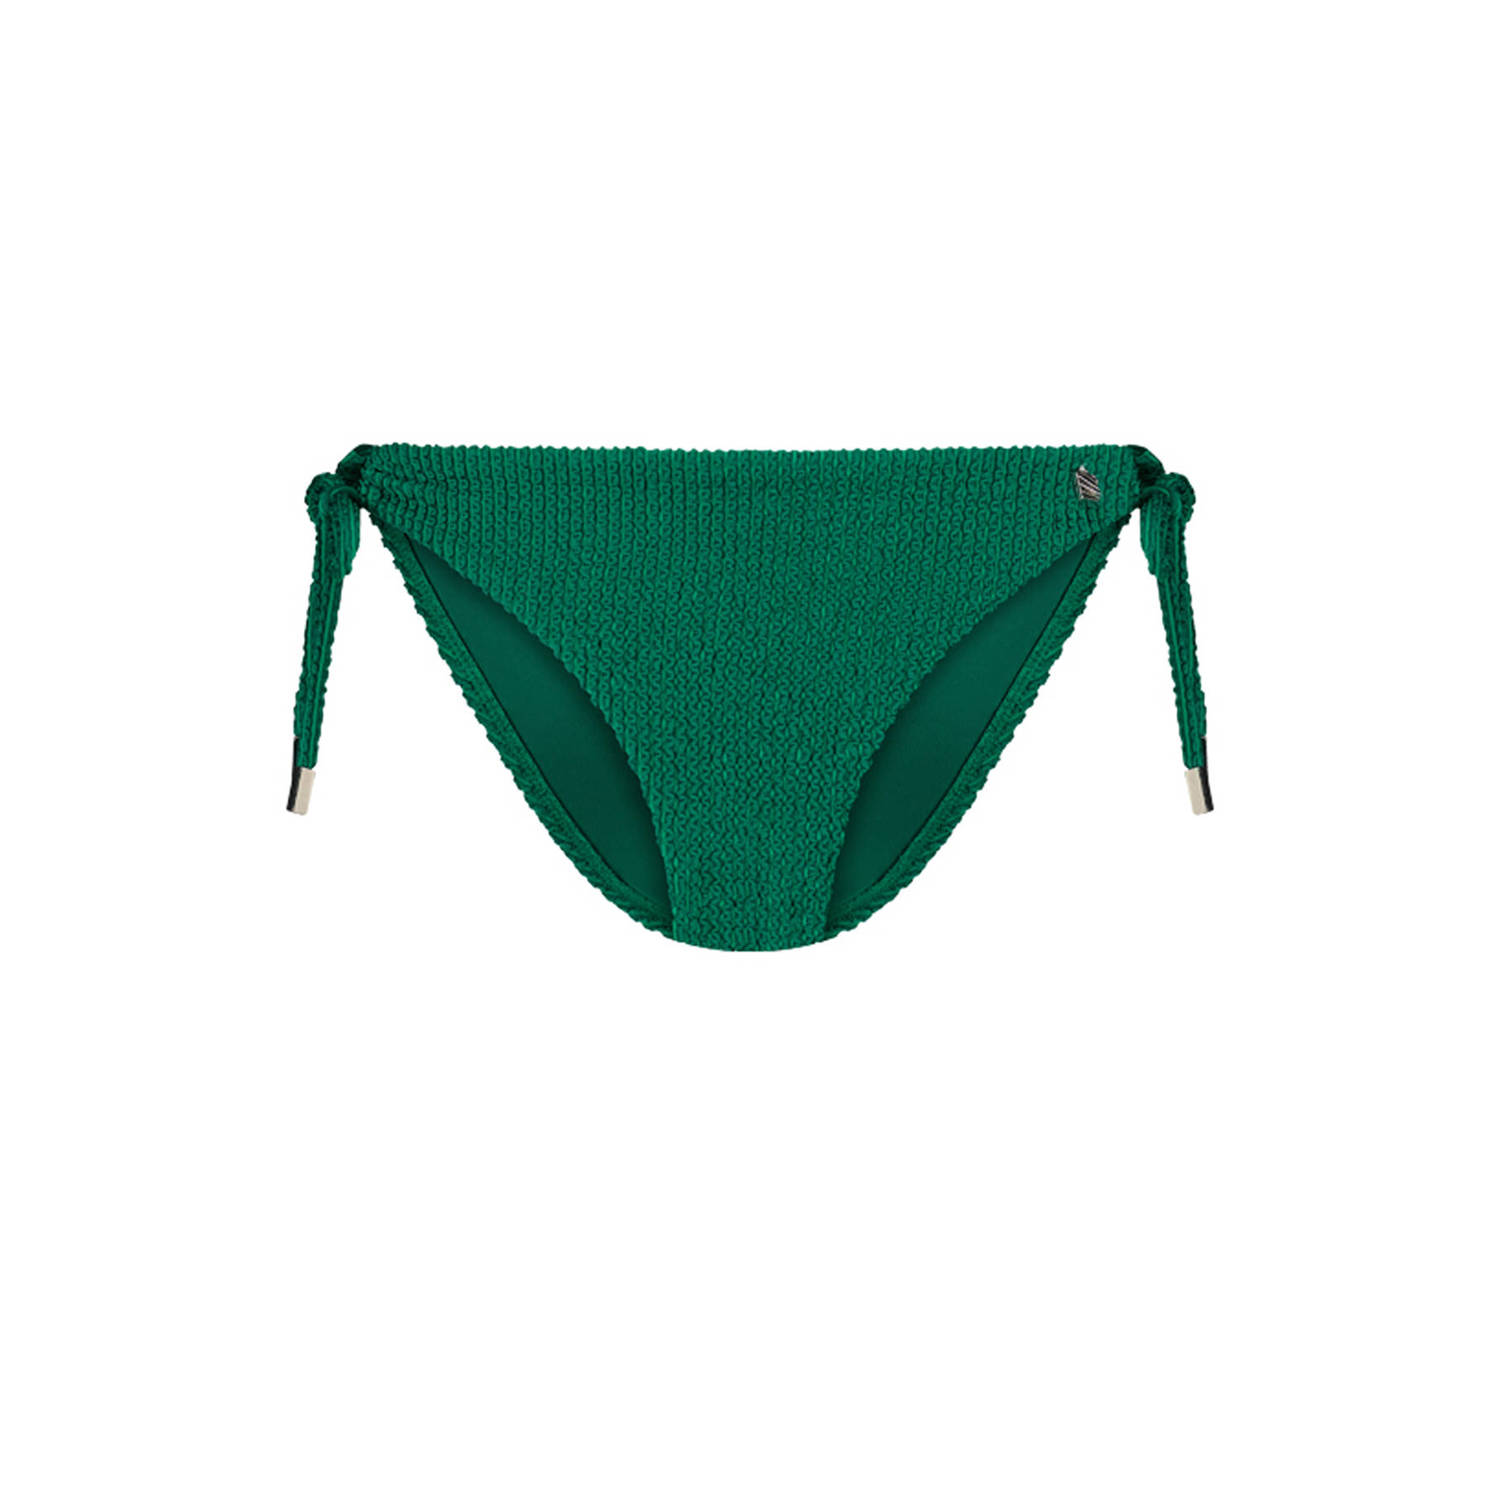 Beachlife strik bikinibroekje met textuur groen